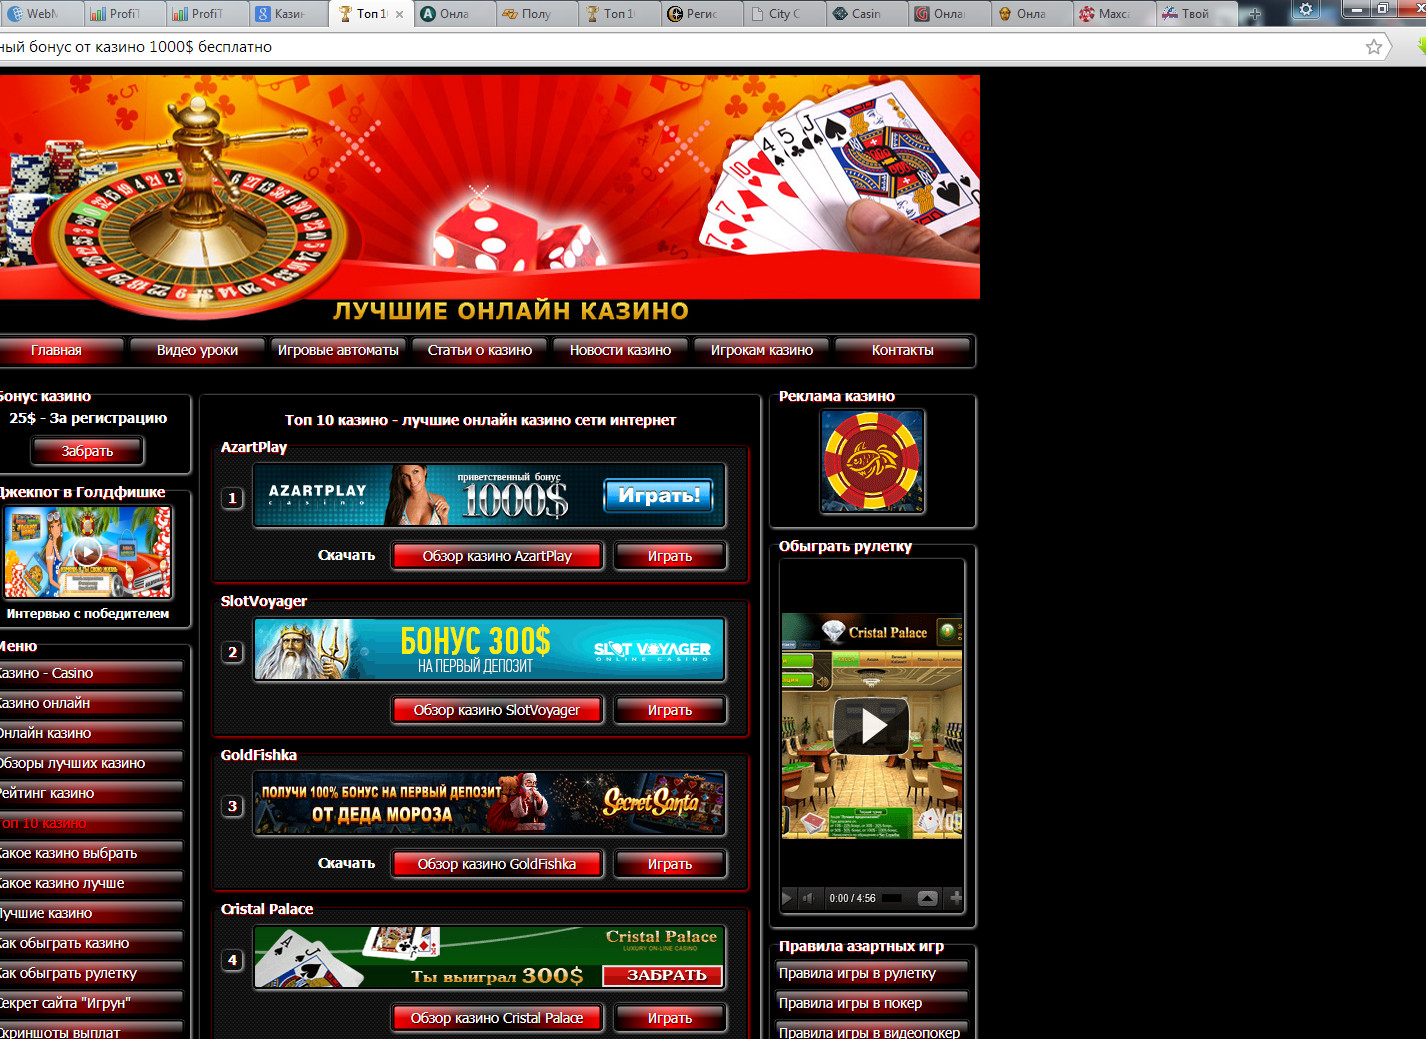 Бонус онлайн казино 1000 casino reels